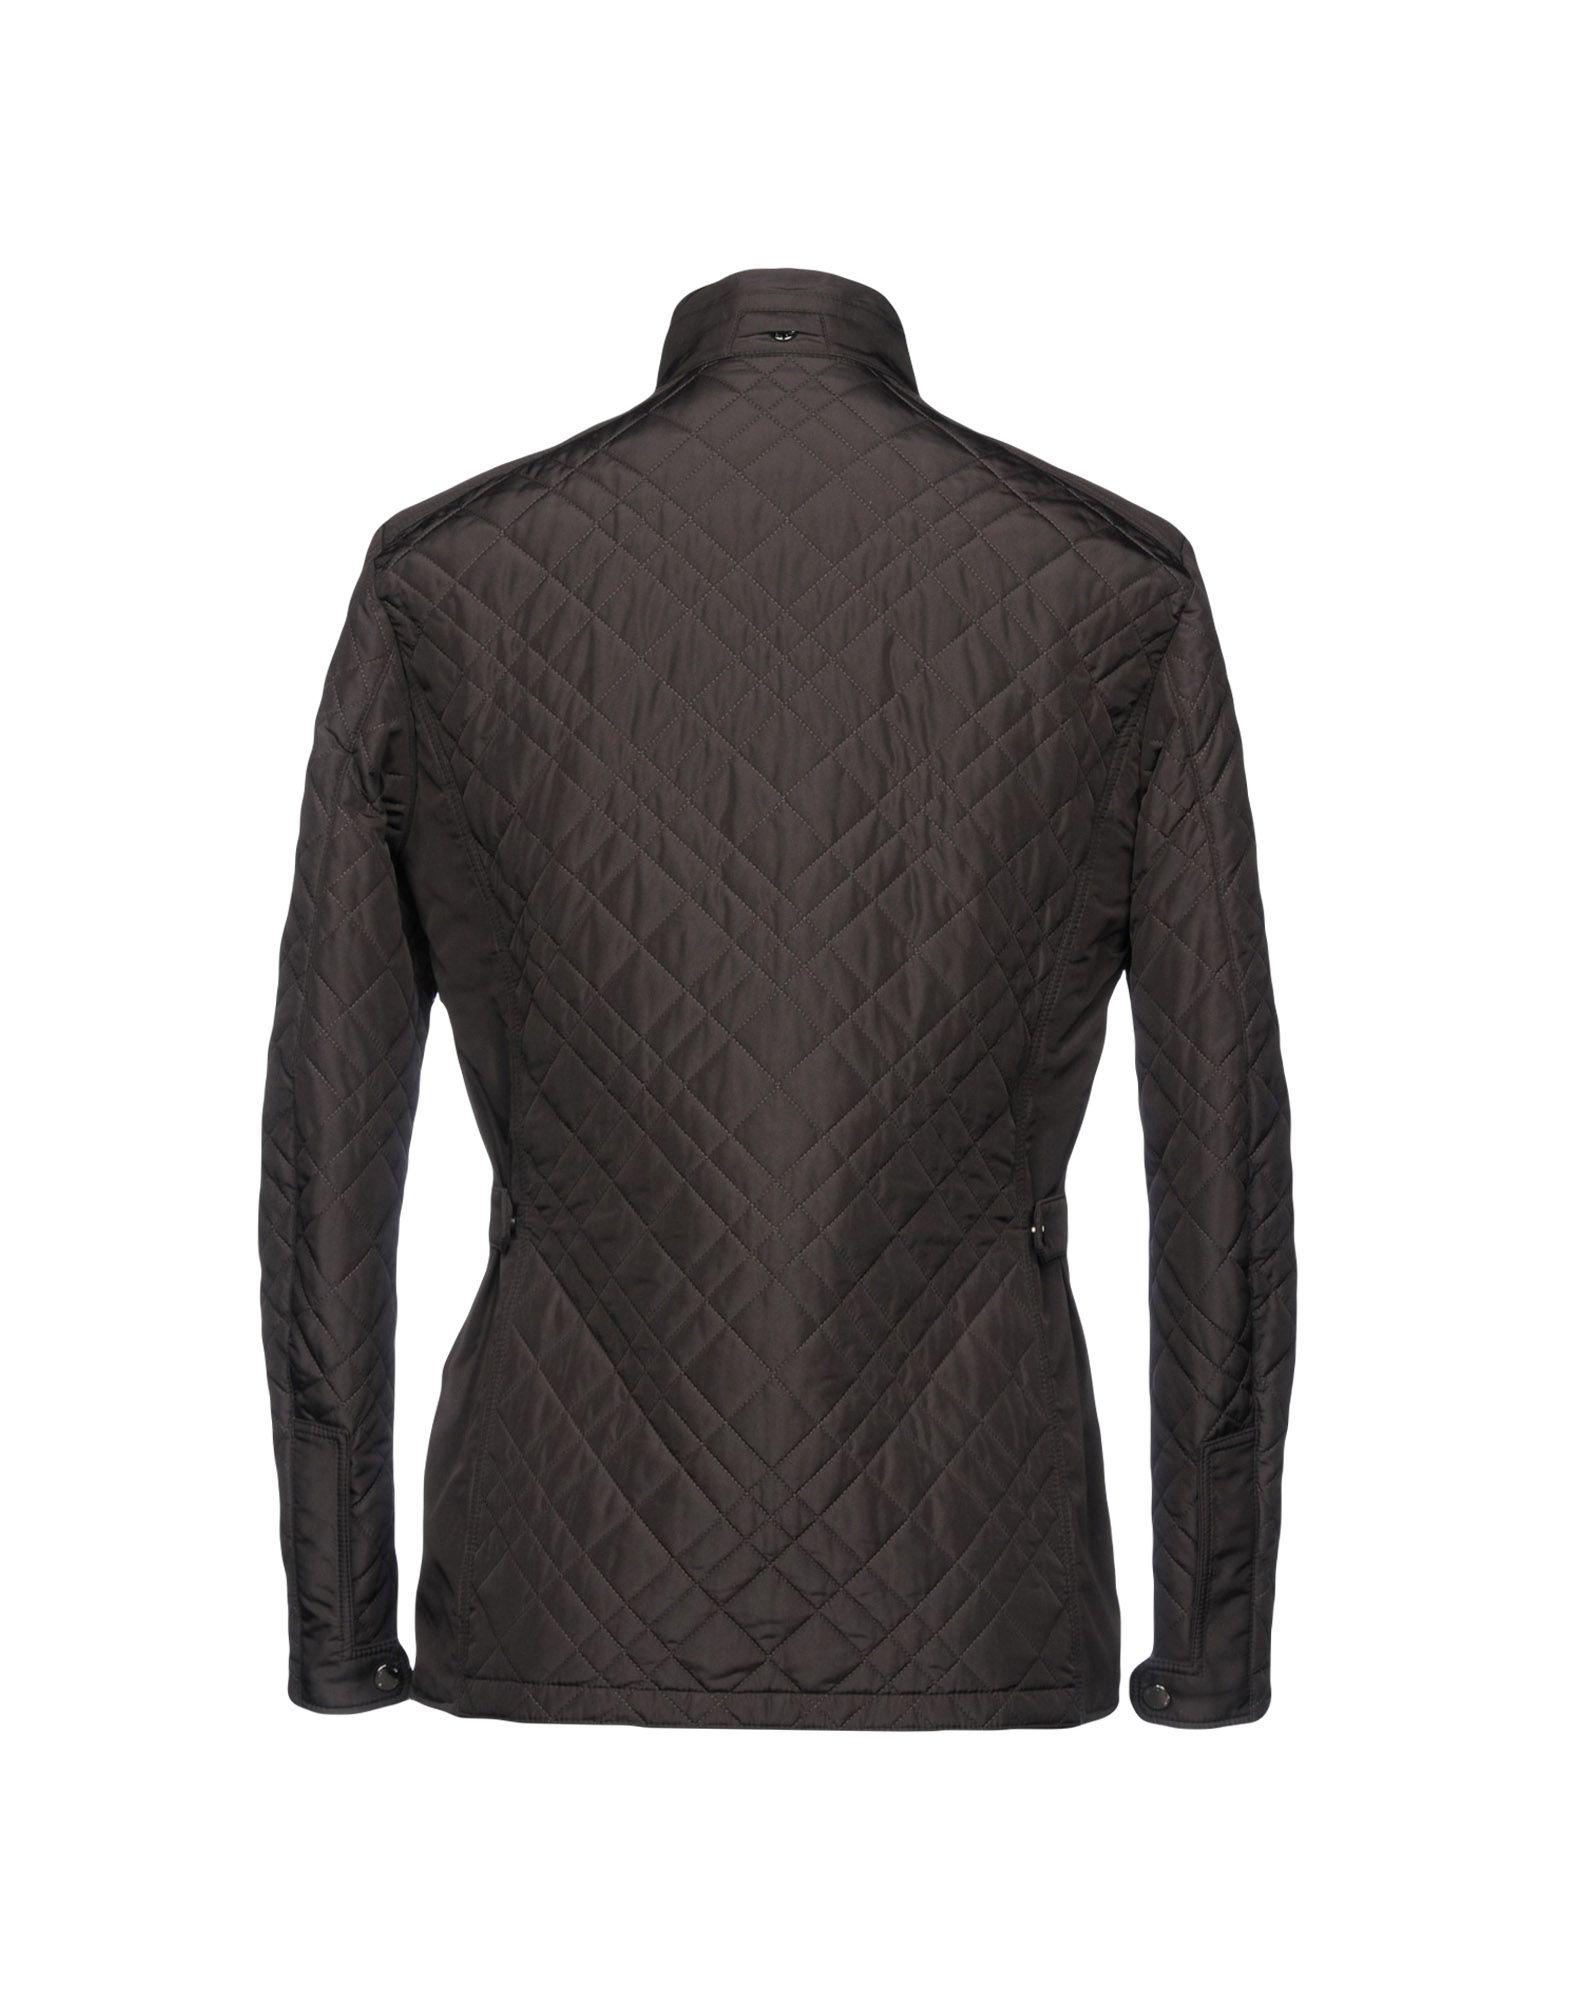 Pal Zileri Synthetic Jackets in Black for Men - Lyst